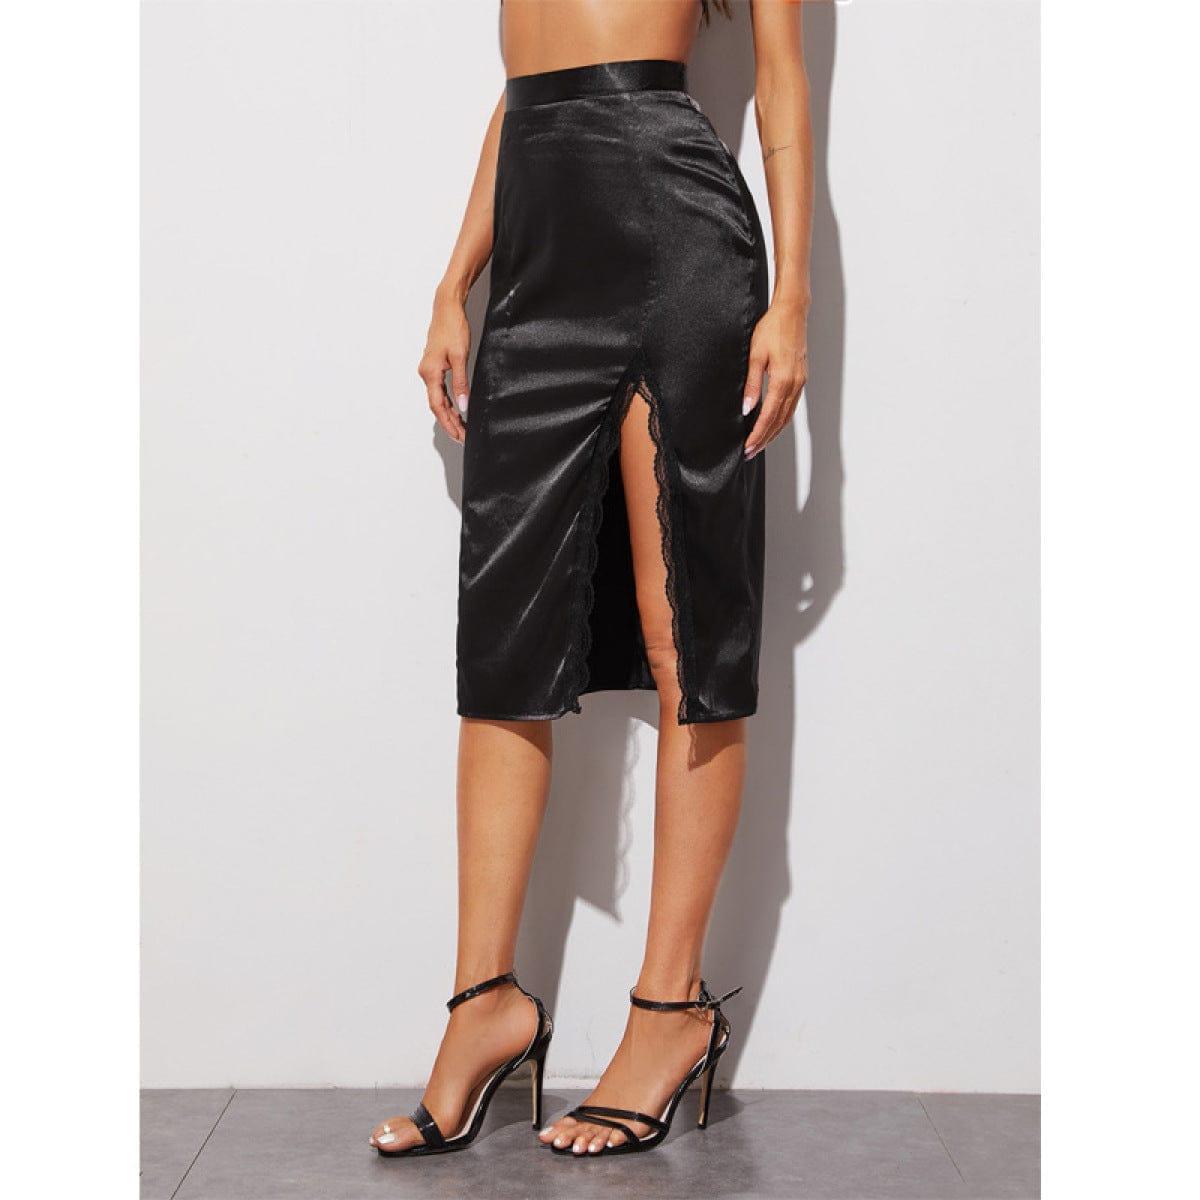 Black Lace Slit Thigh High Waist Skirt